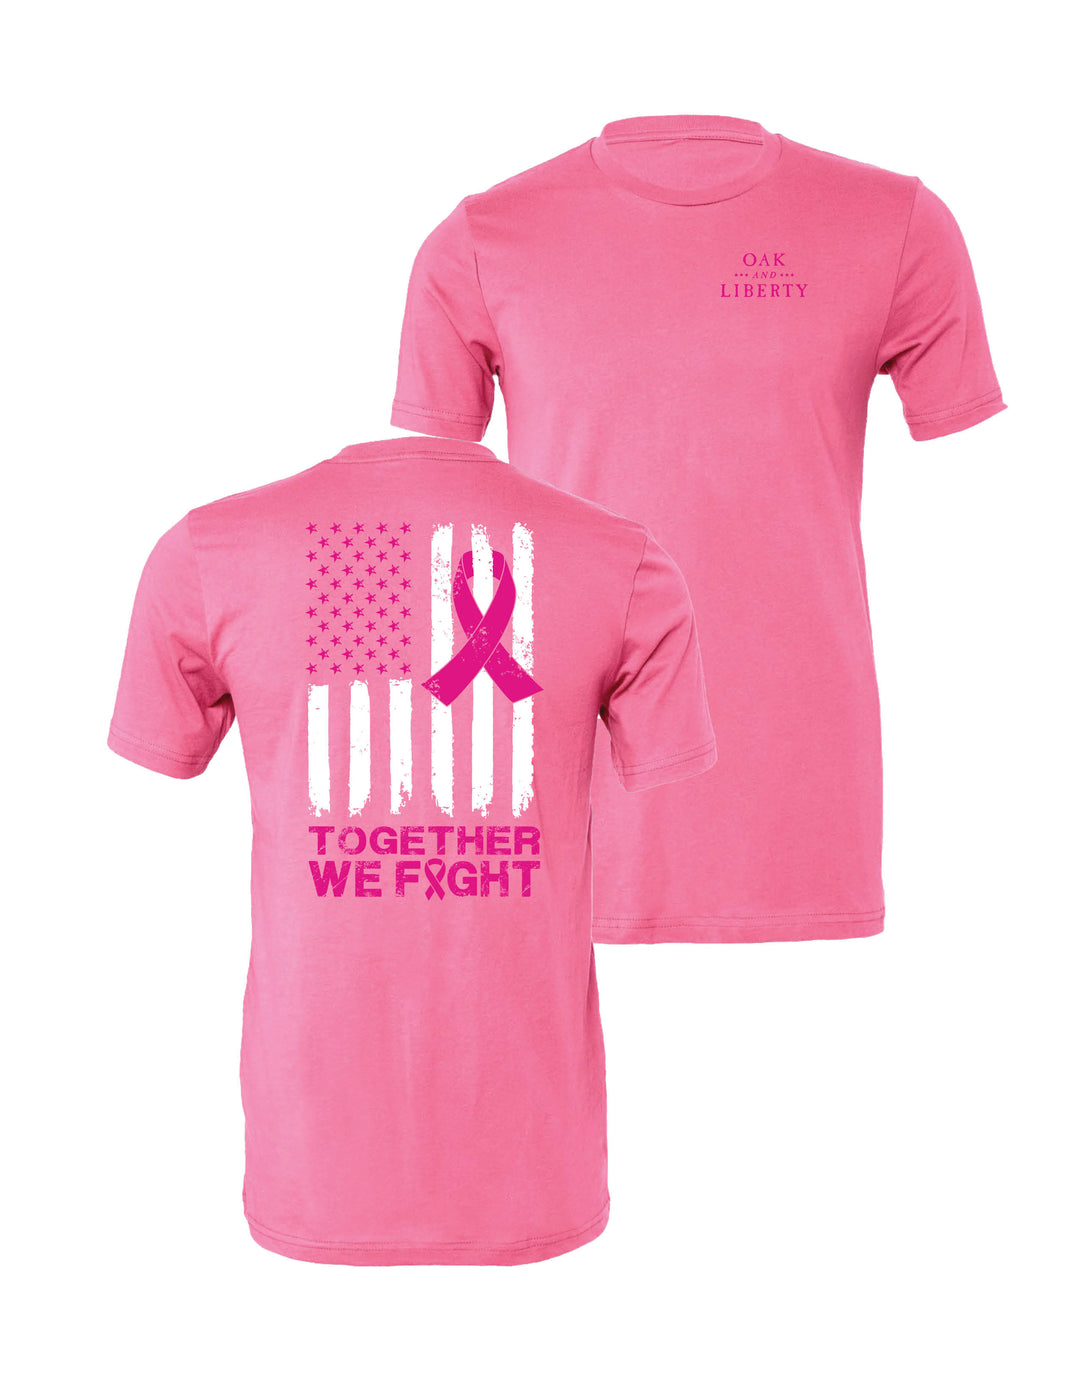 Breast Cancer Awareness T-Shirt